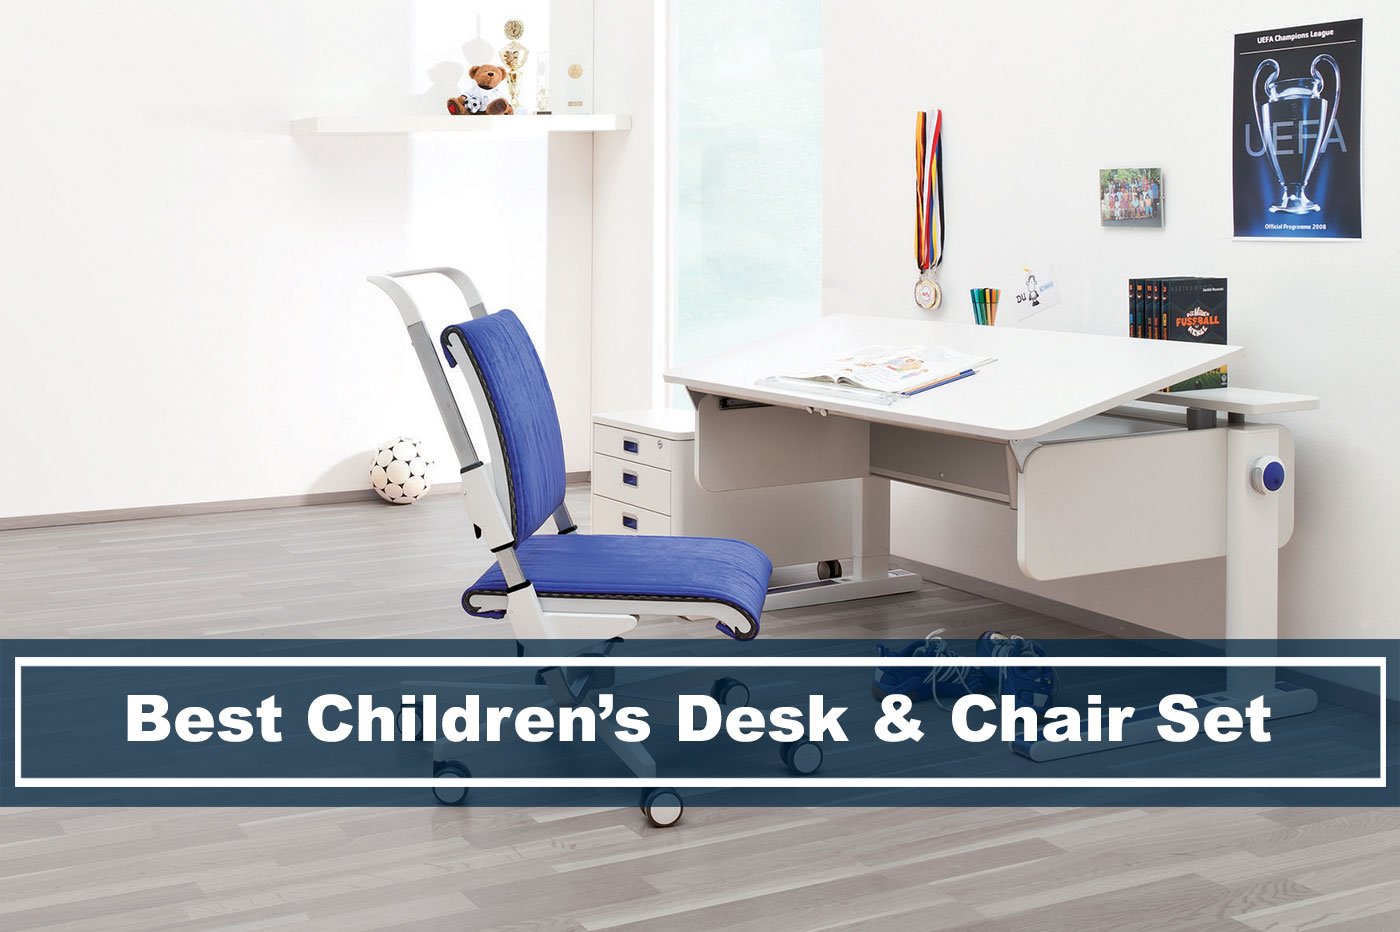 ergonomic table for child